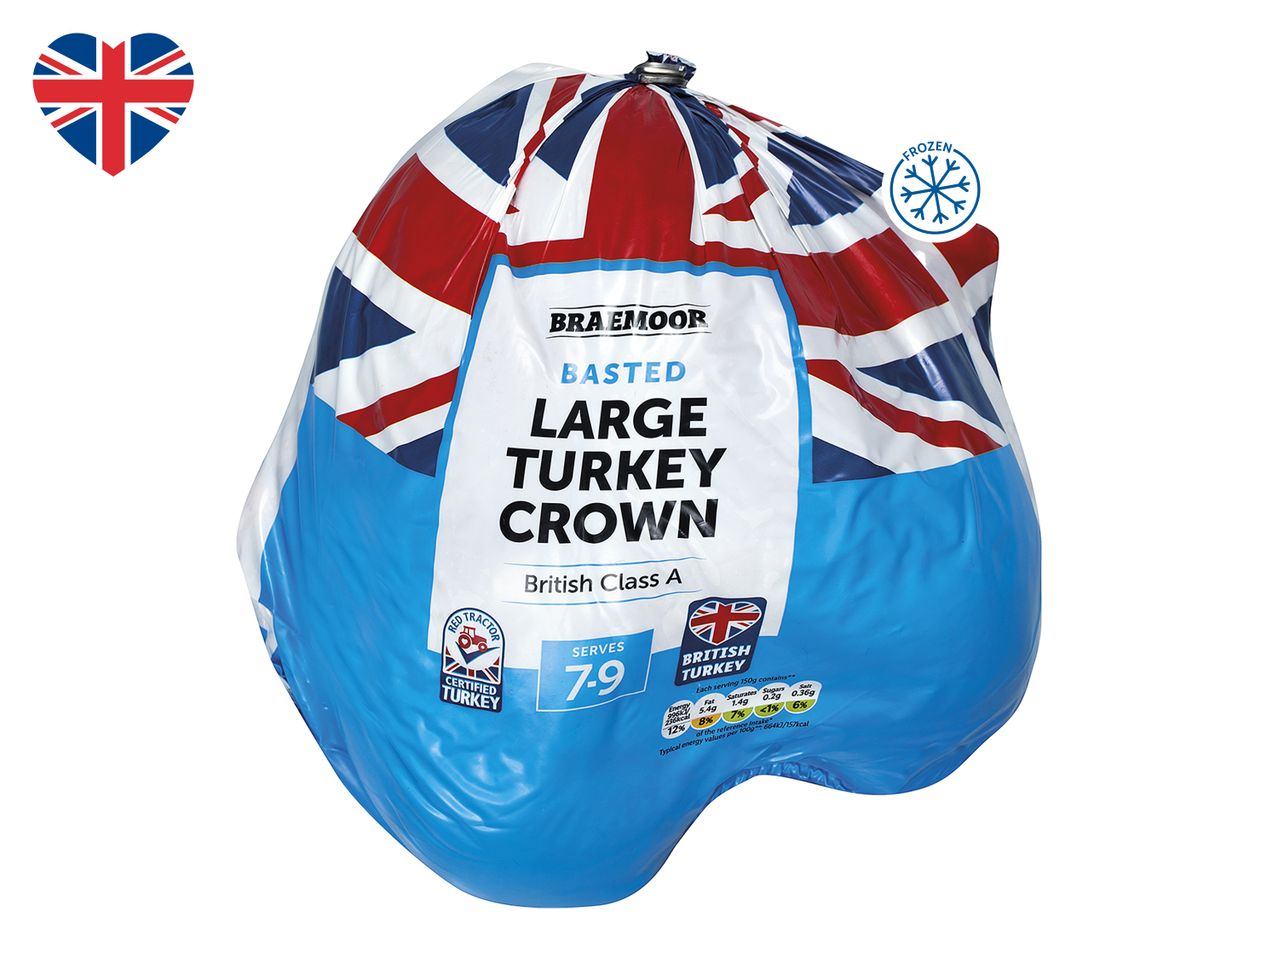 Go to full screen view: Braemoor British Large Turkey Crown - Image 1